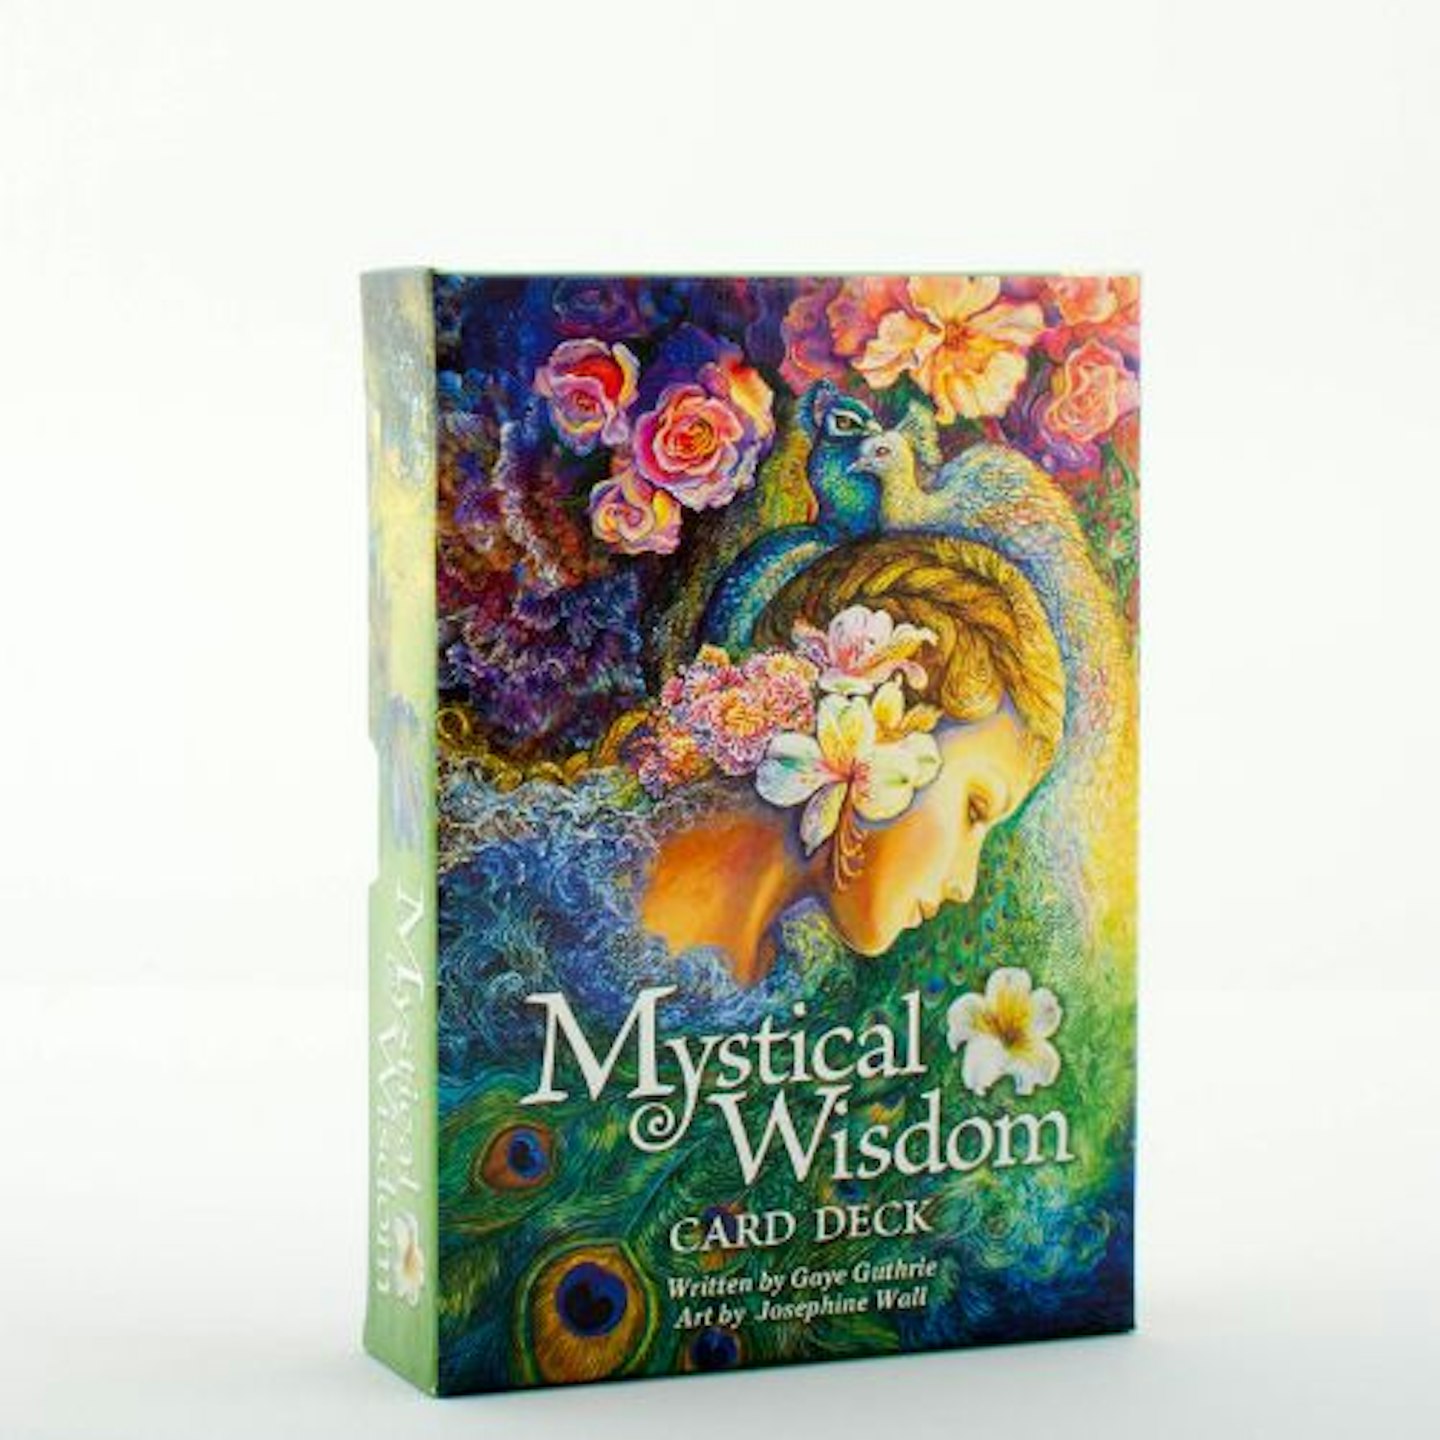 Mystical Wisdom Card Deck by Gaye Guthrie and Josephine Wall